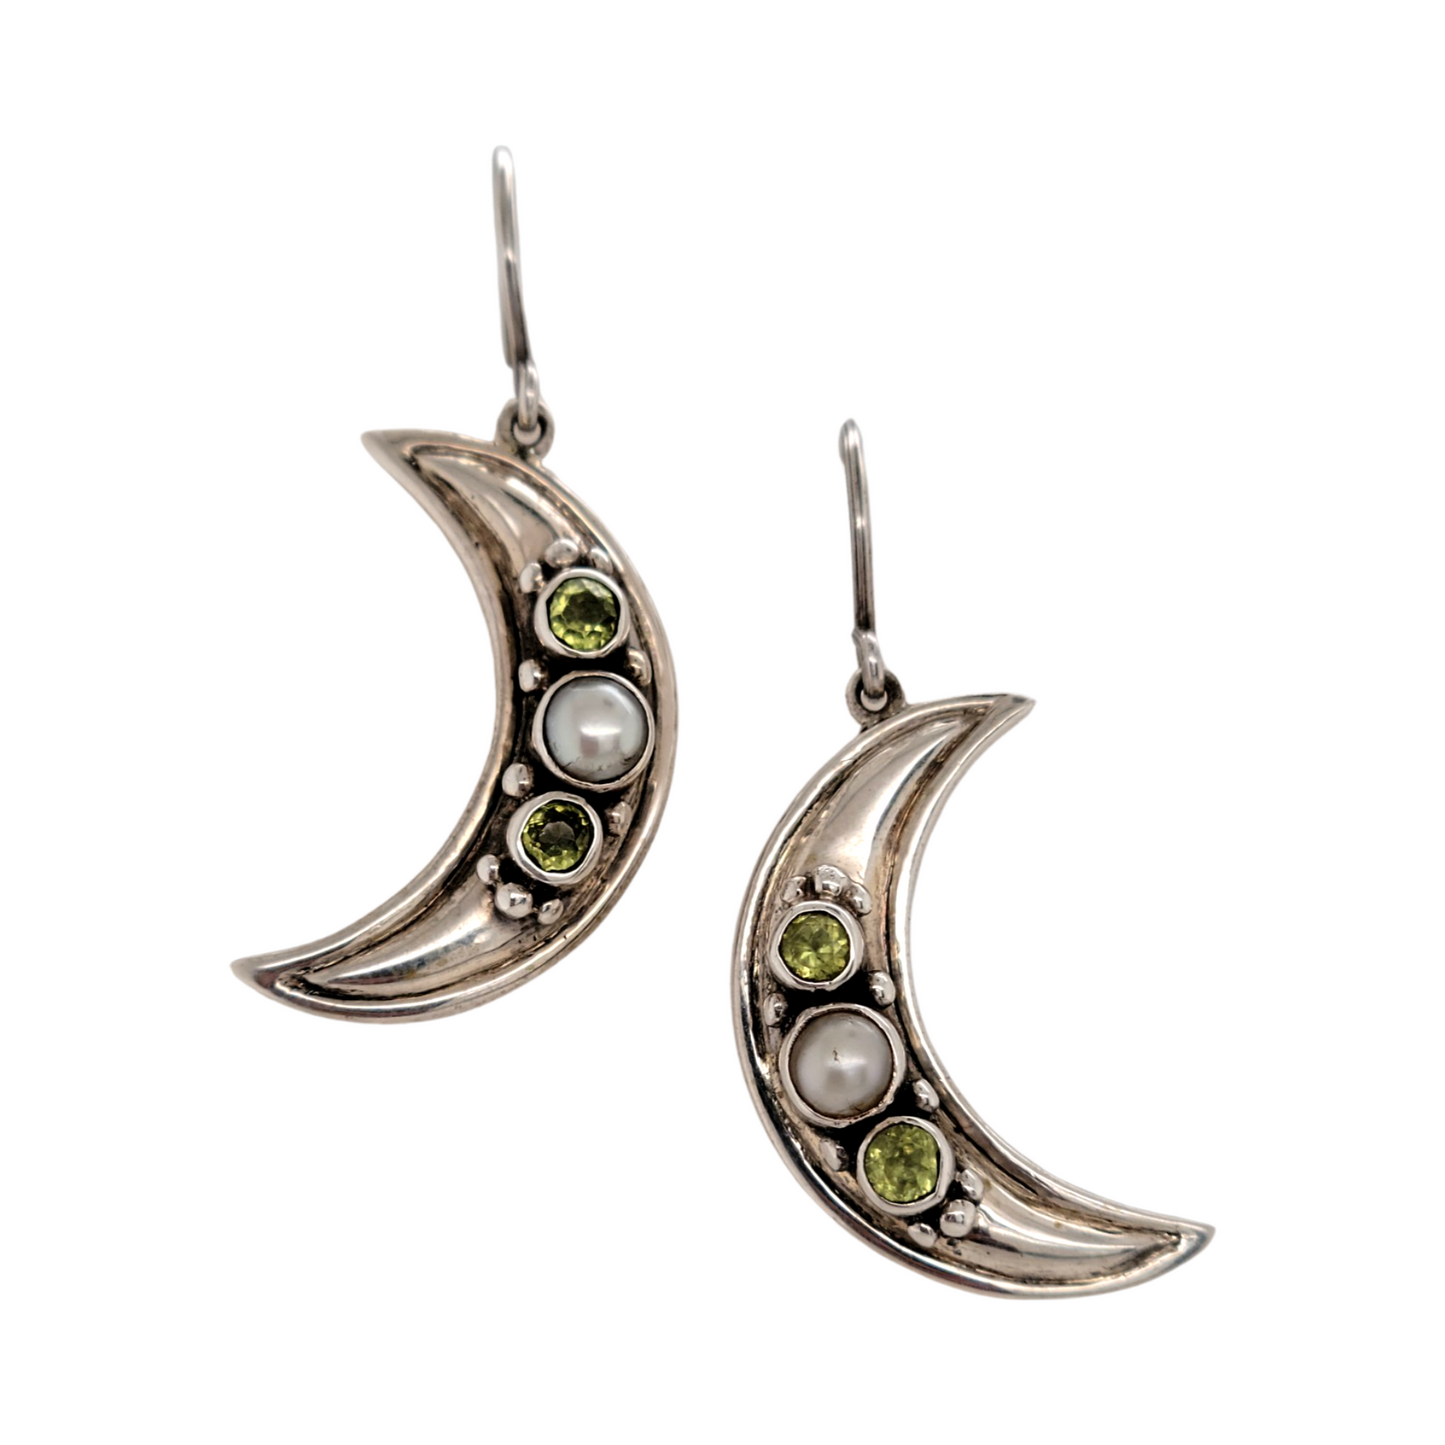 Pearl and Peridot moon earrings